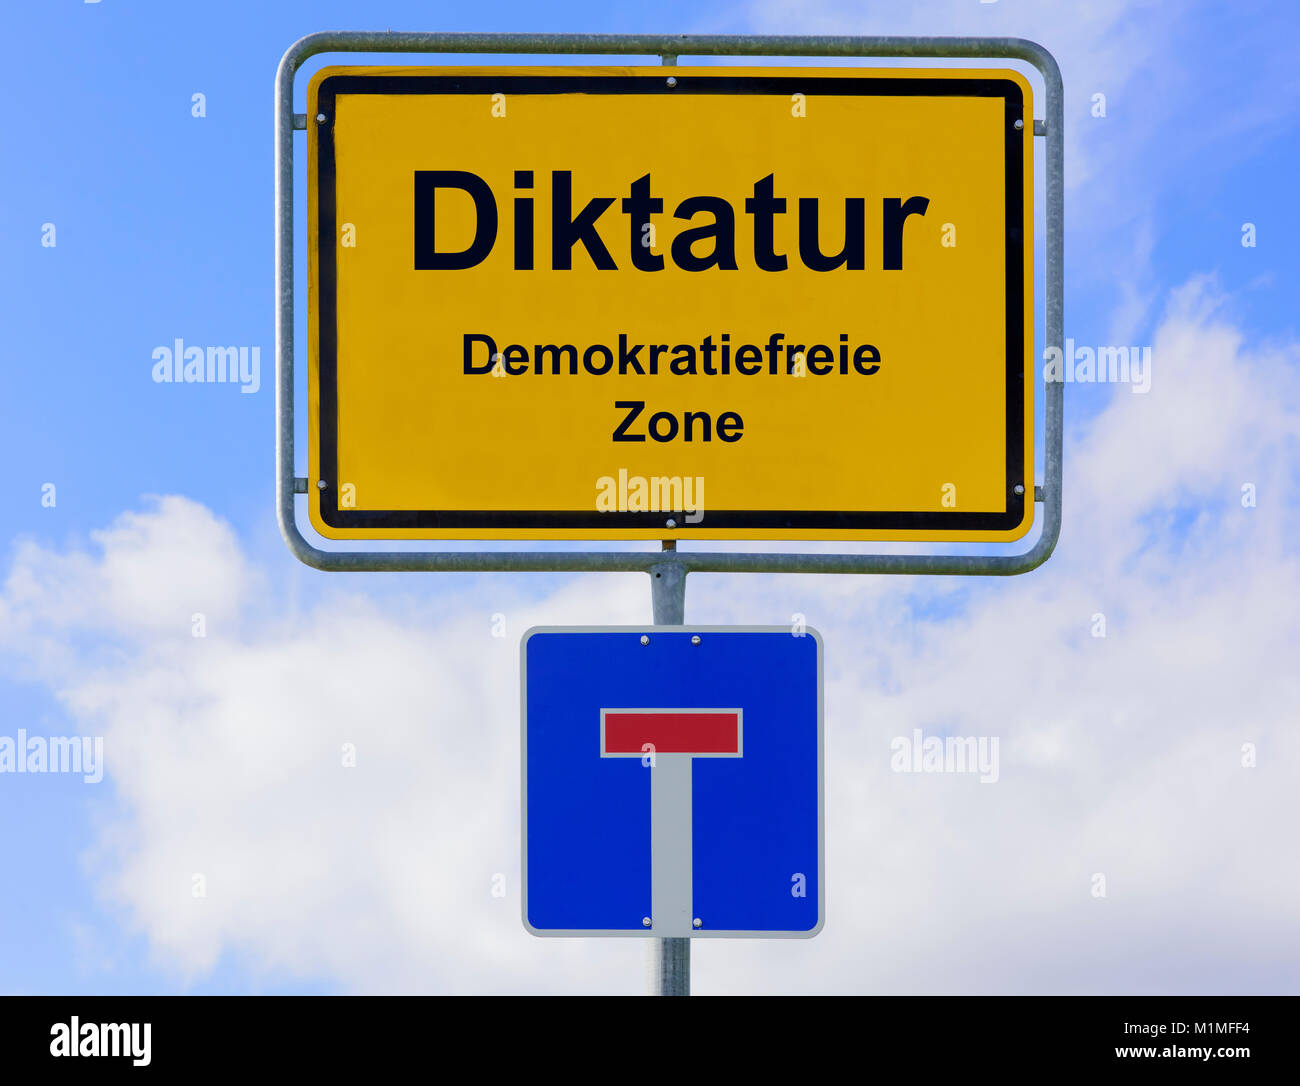 Diktatur in der demokratiefreien Zone Stock Photo